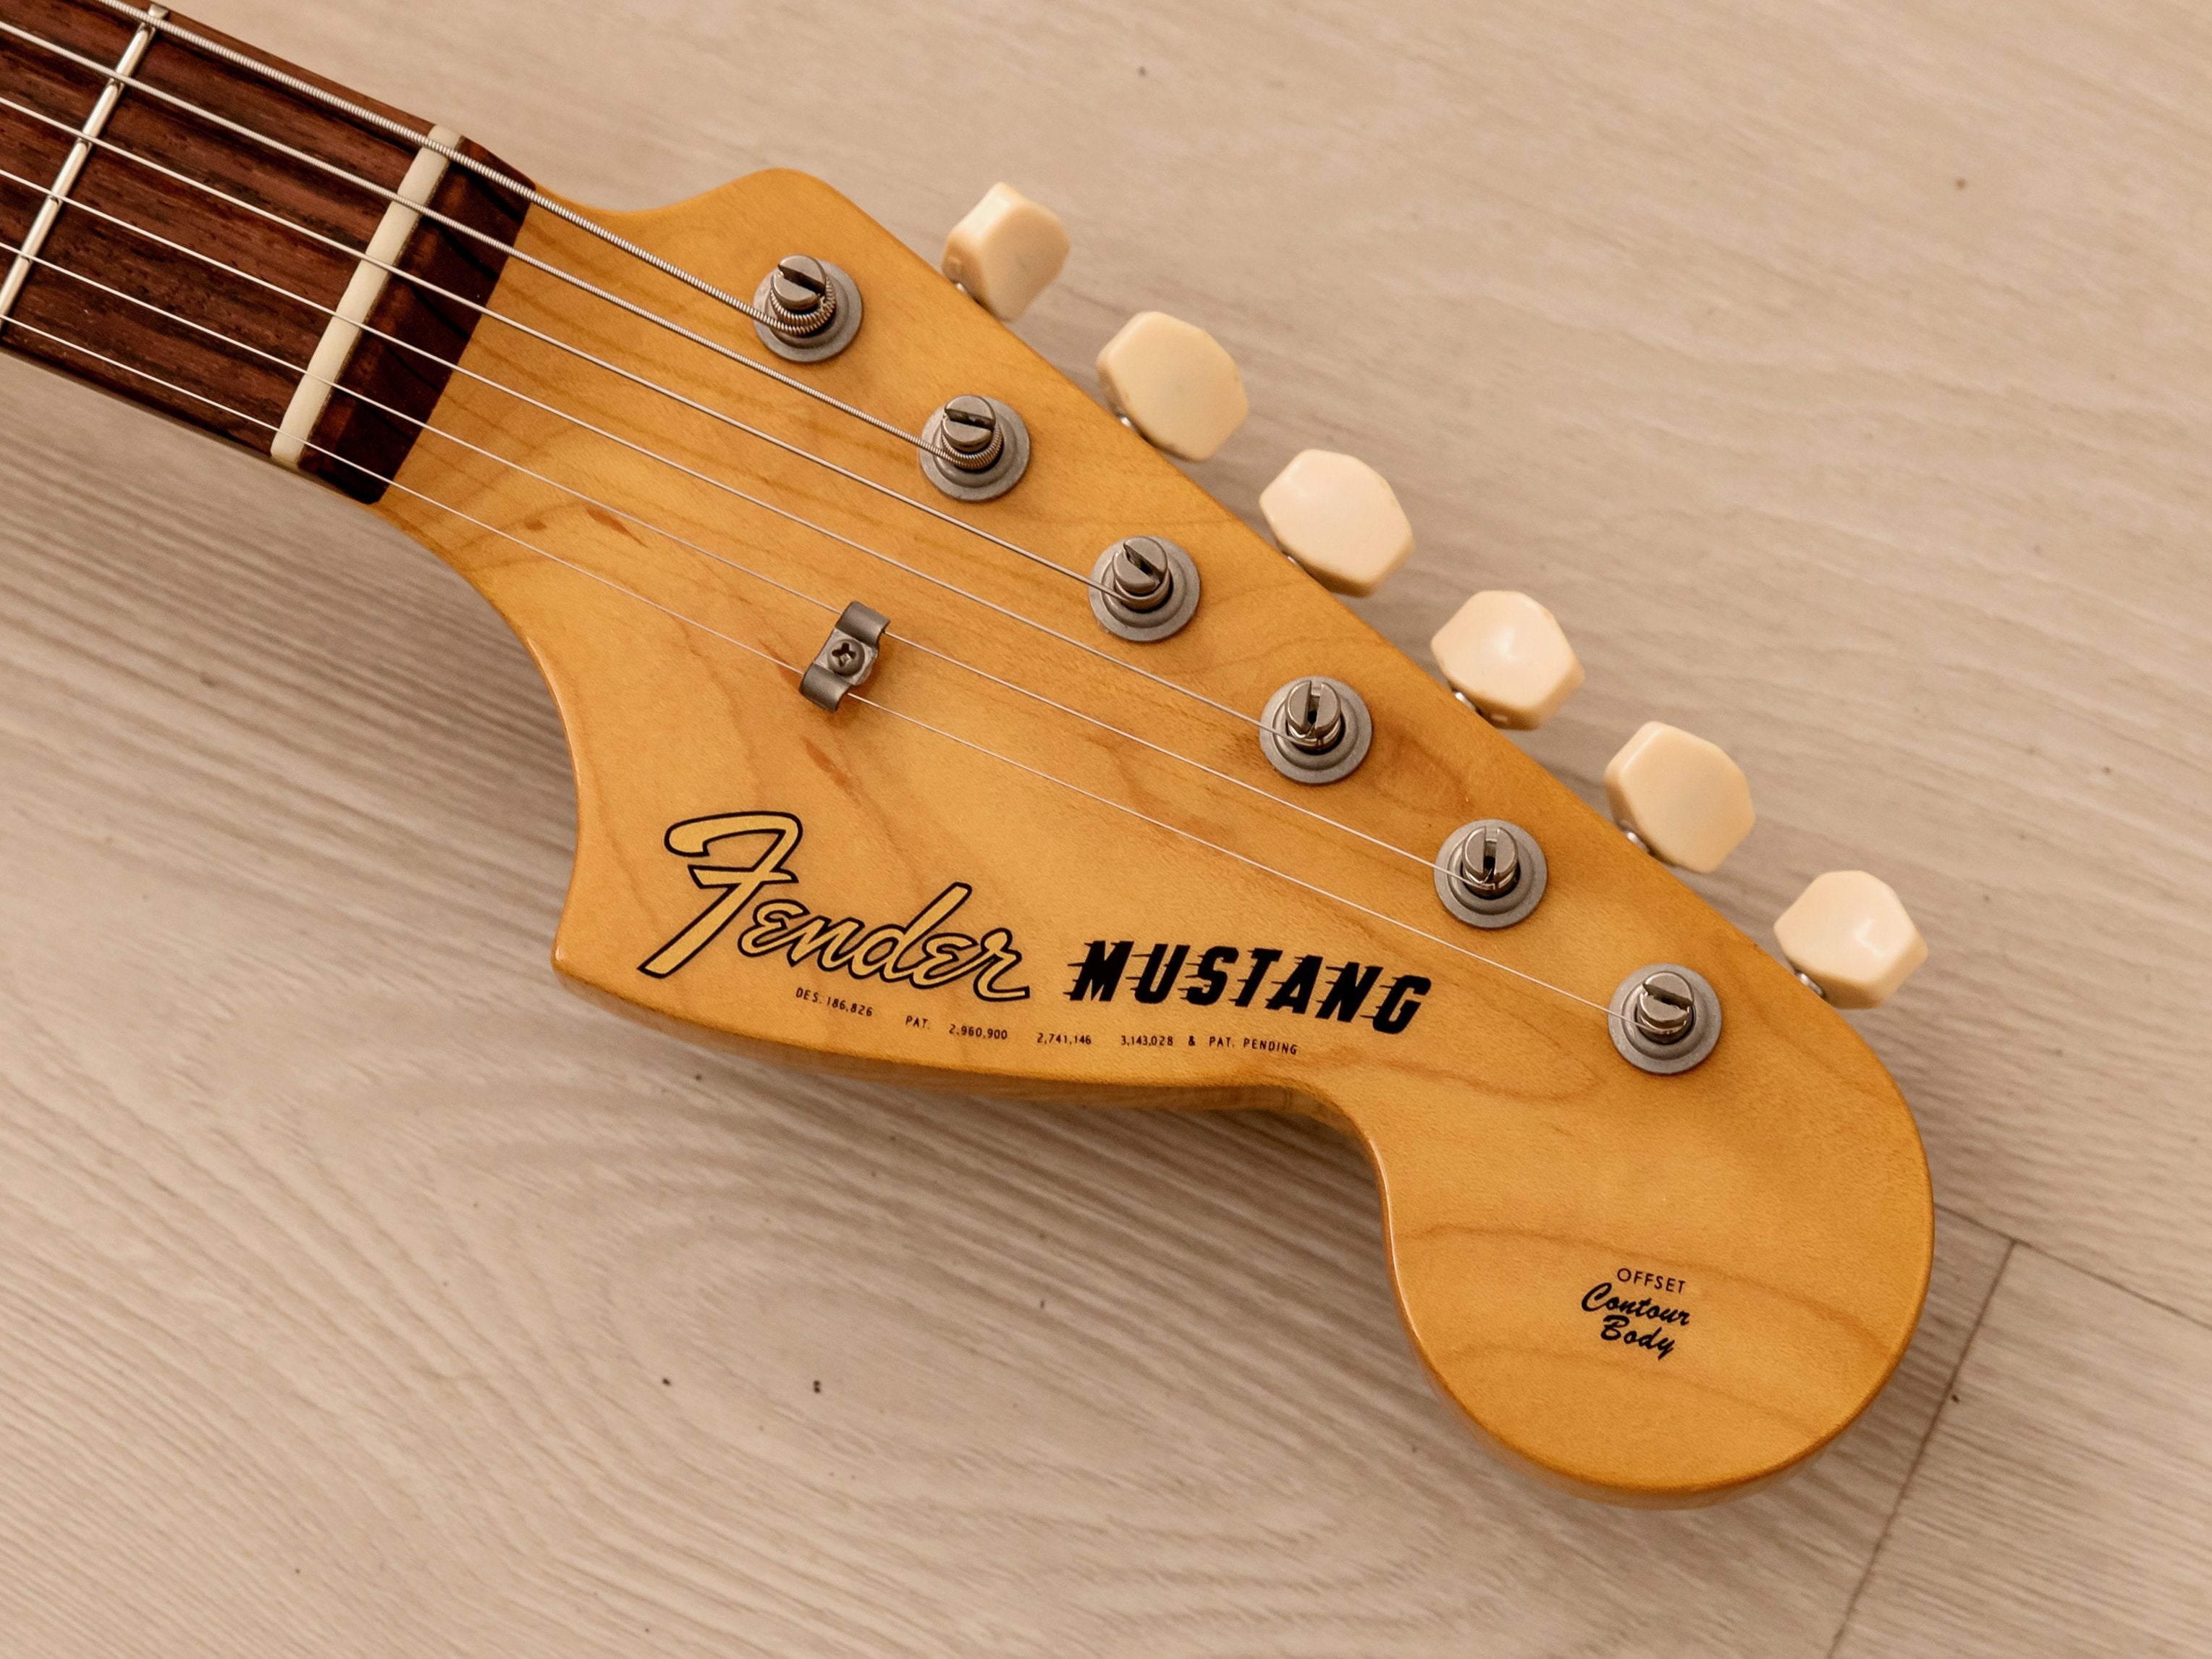 2010 Fender Mustang ’65 Vintage Reissue MG65 Dakota Red w/ Gray Bobbins & USA Harness, Japan MIJ